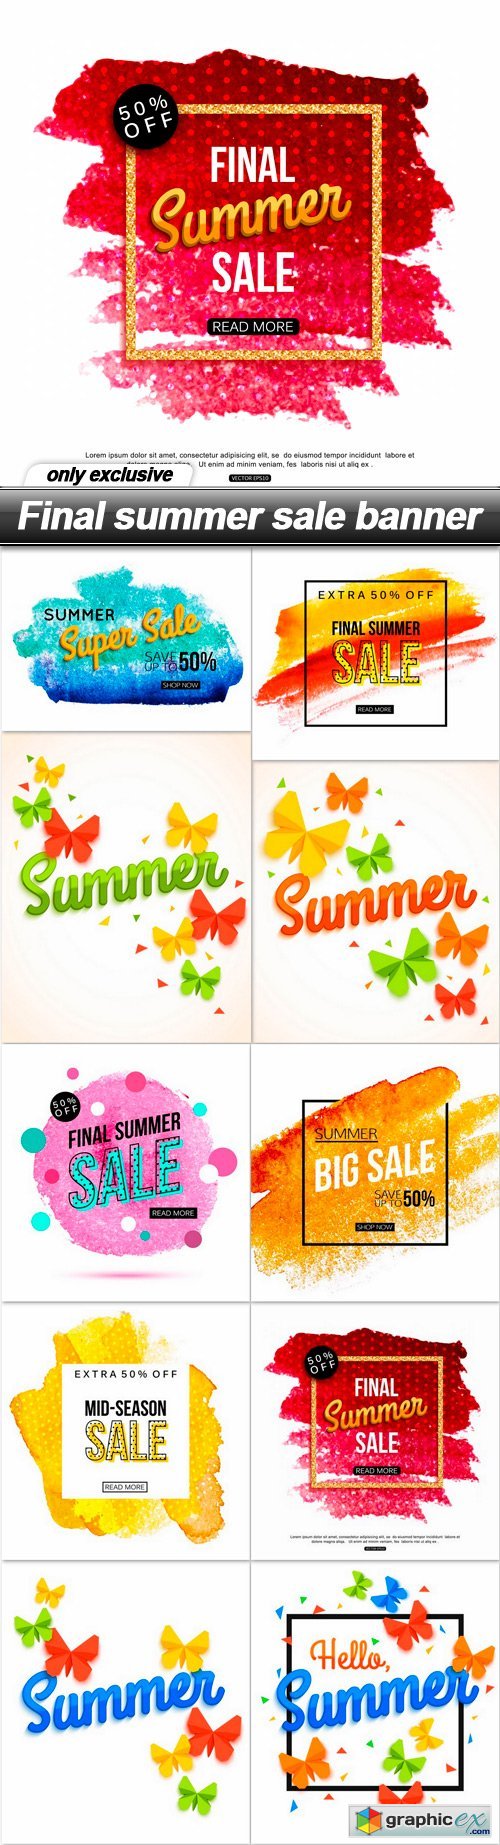 Final summer sale banner - 10 EPS